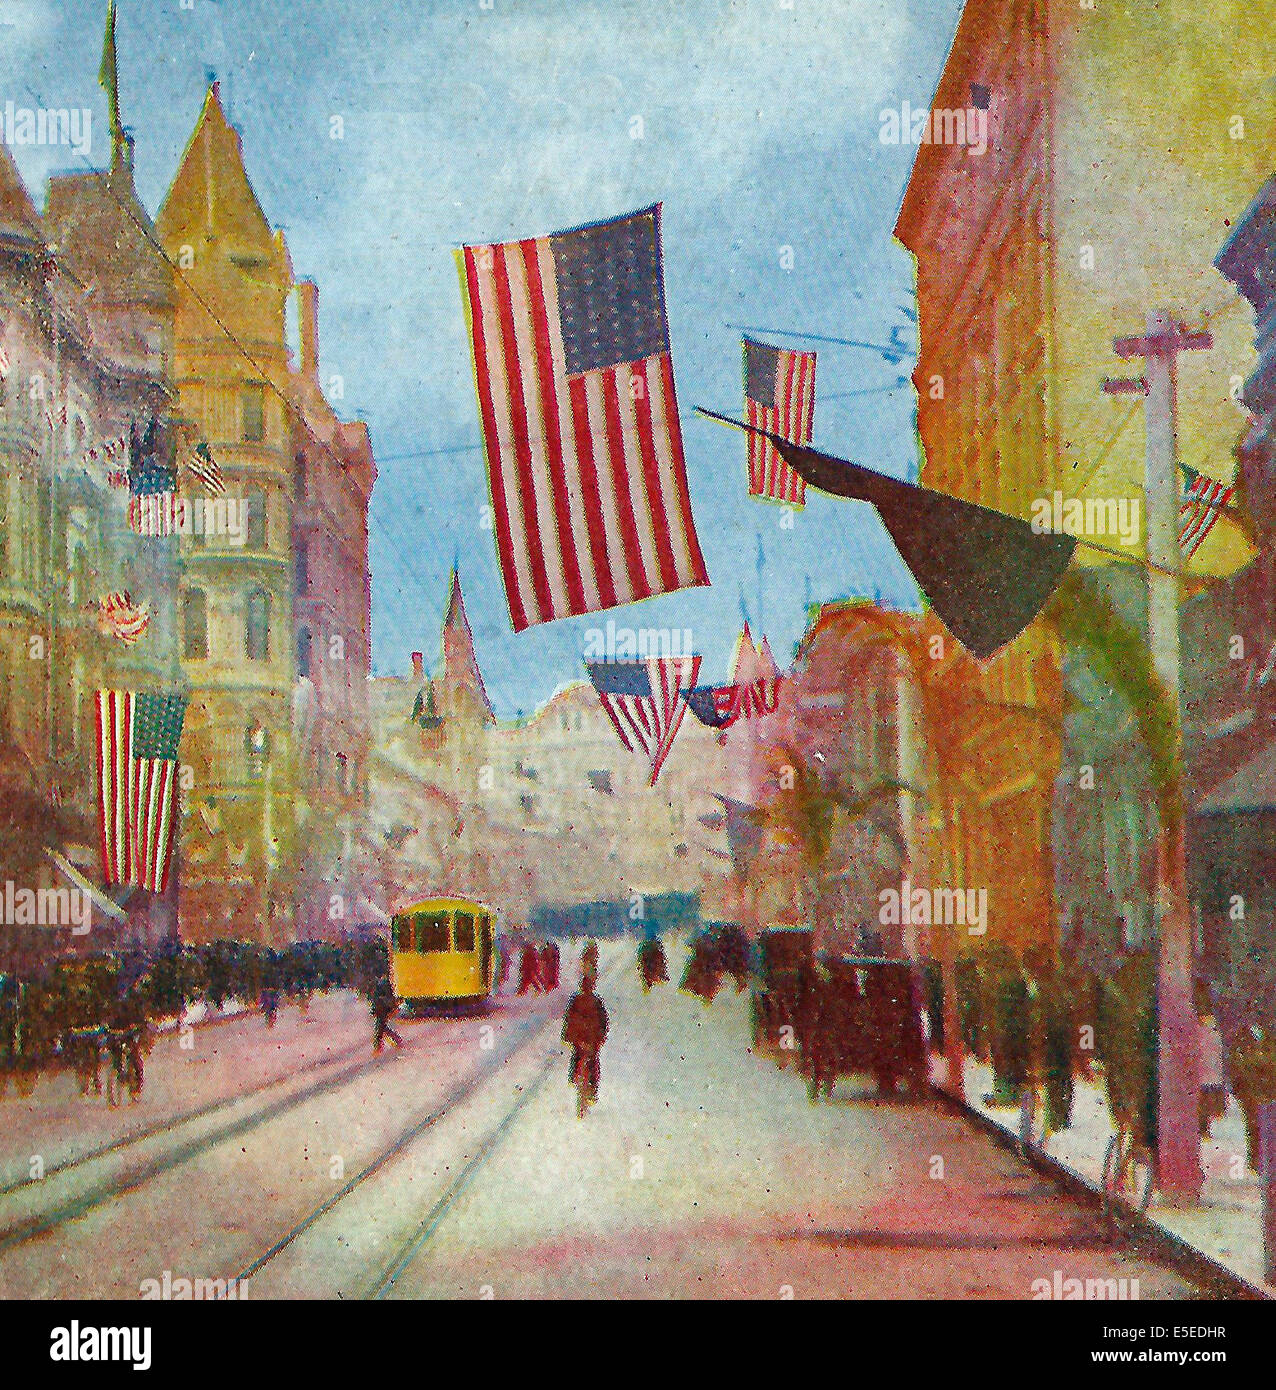 Spring Street, Los Angeles, Californie, vers 1900 Banque D'Images